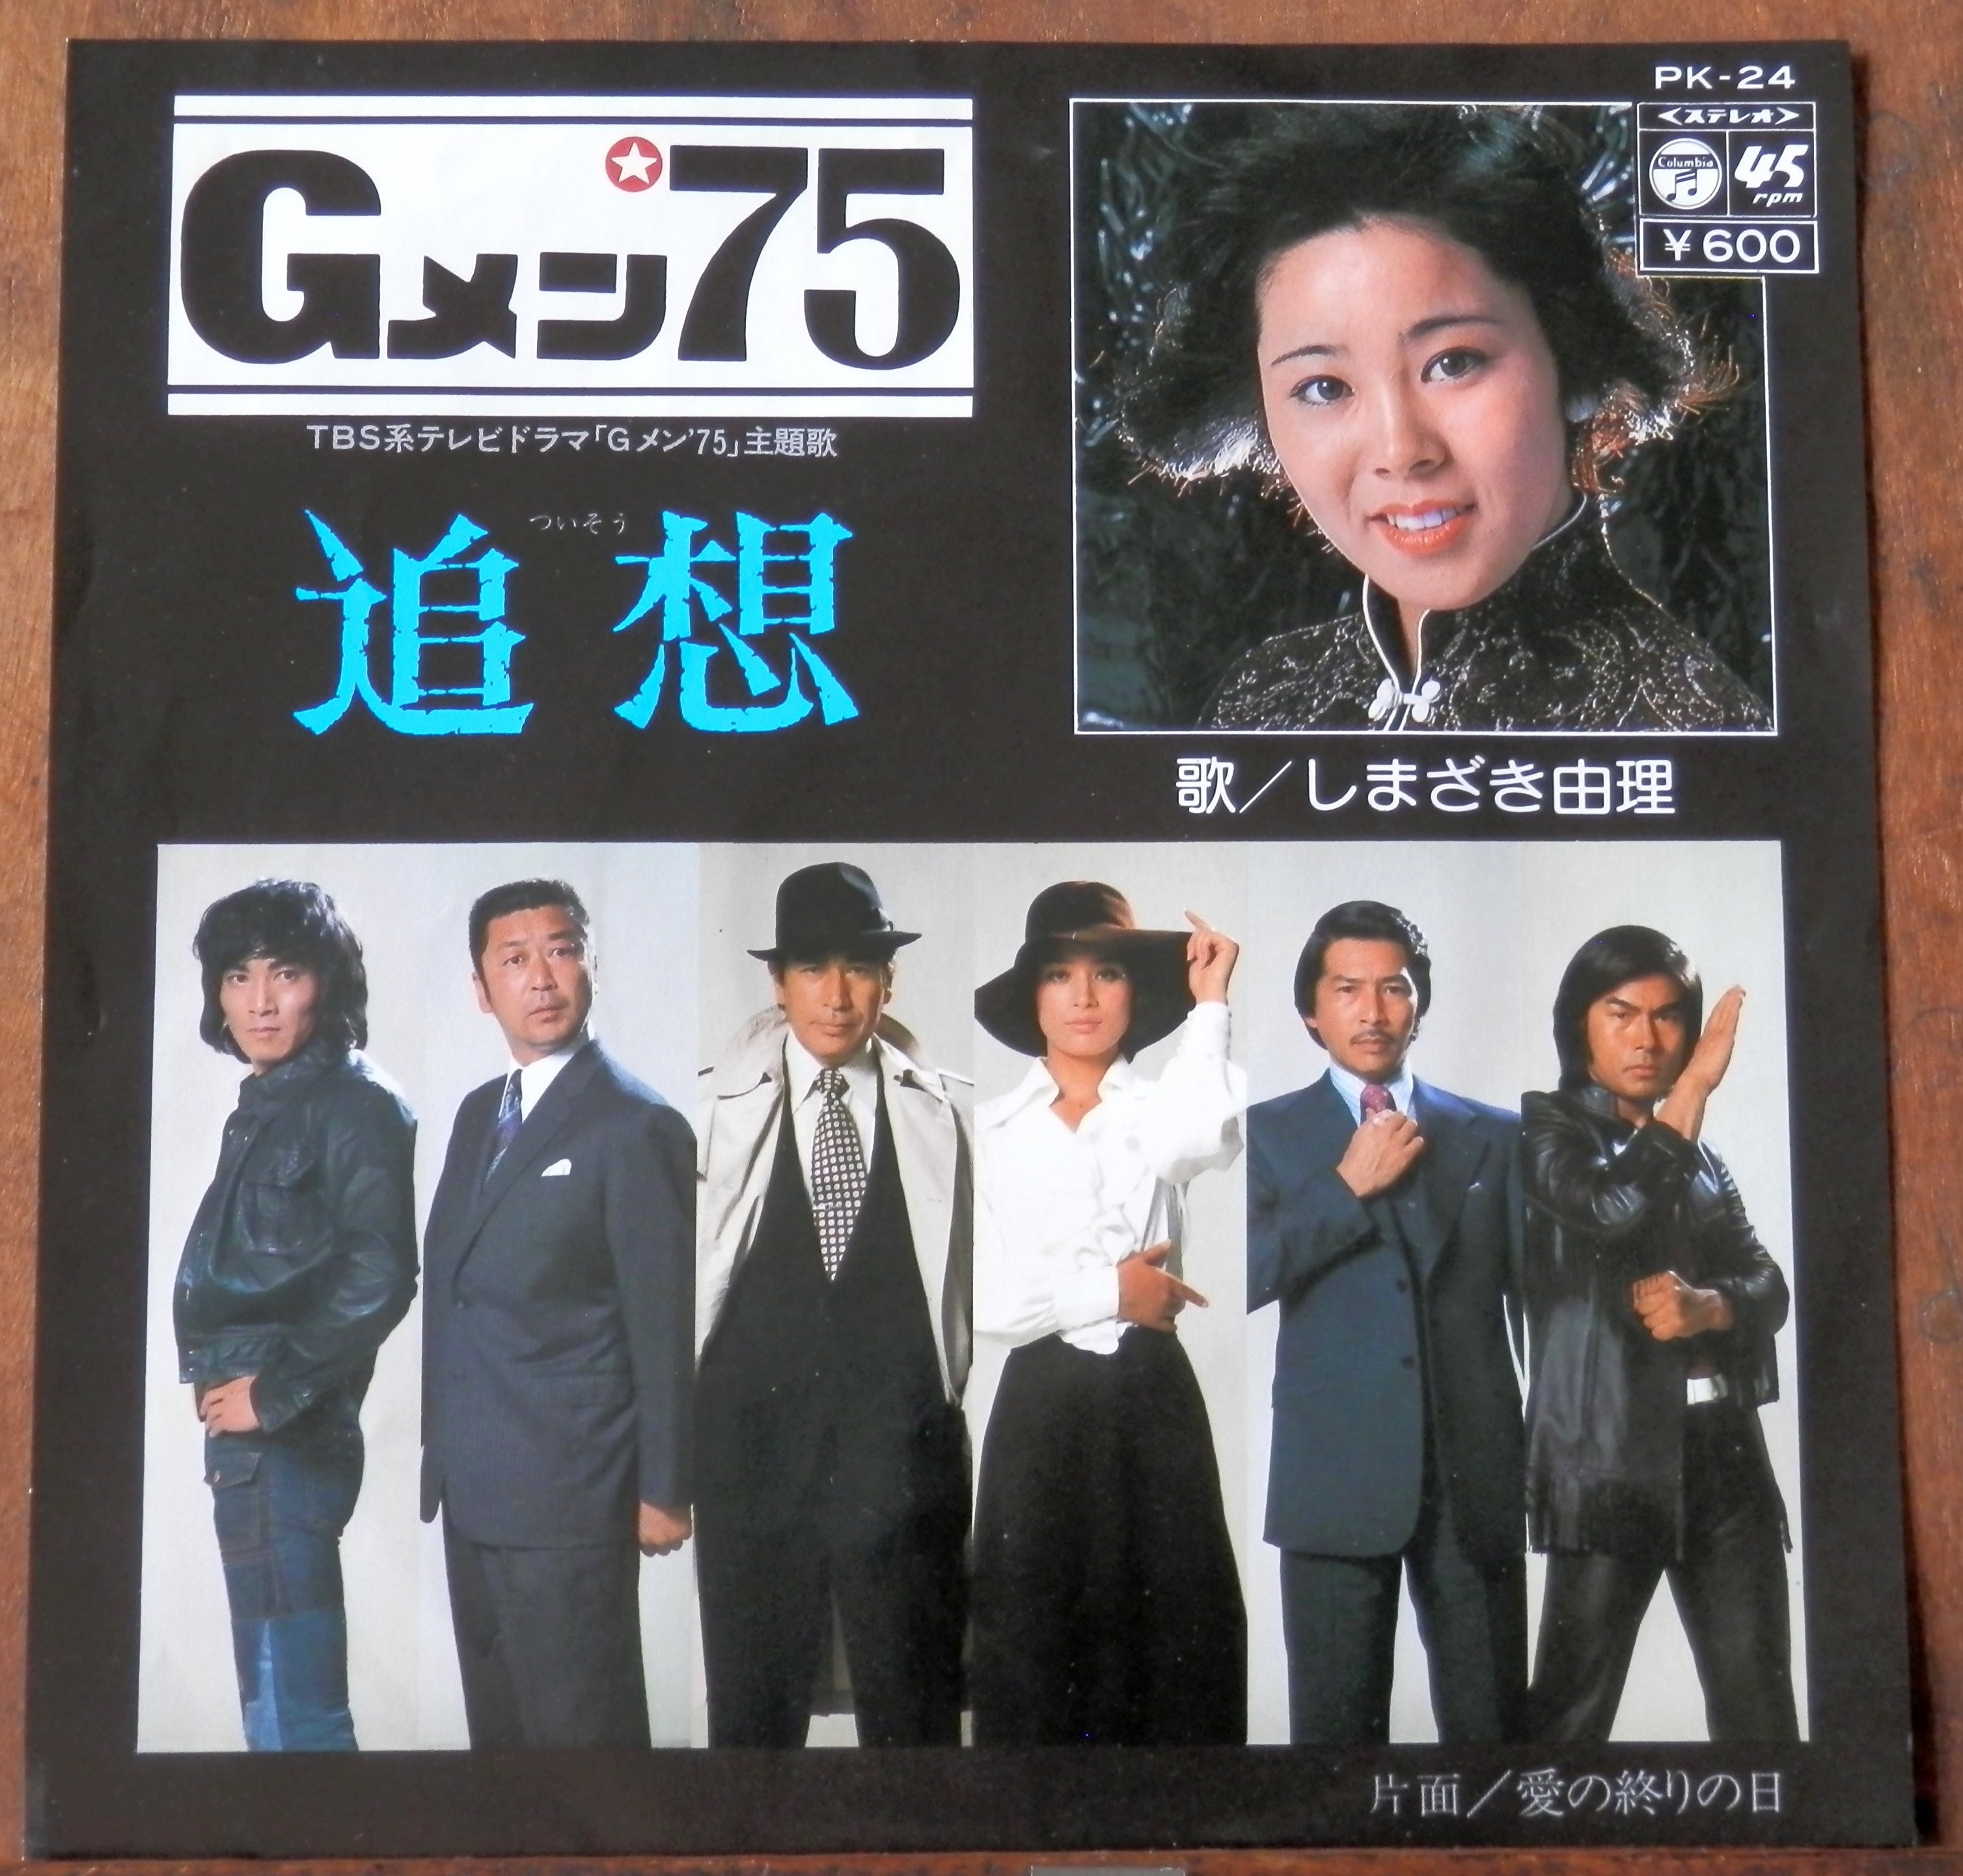 75【EP】しまざき由理 追想 *Gメン75 音盤窟レコード